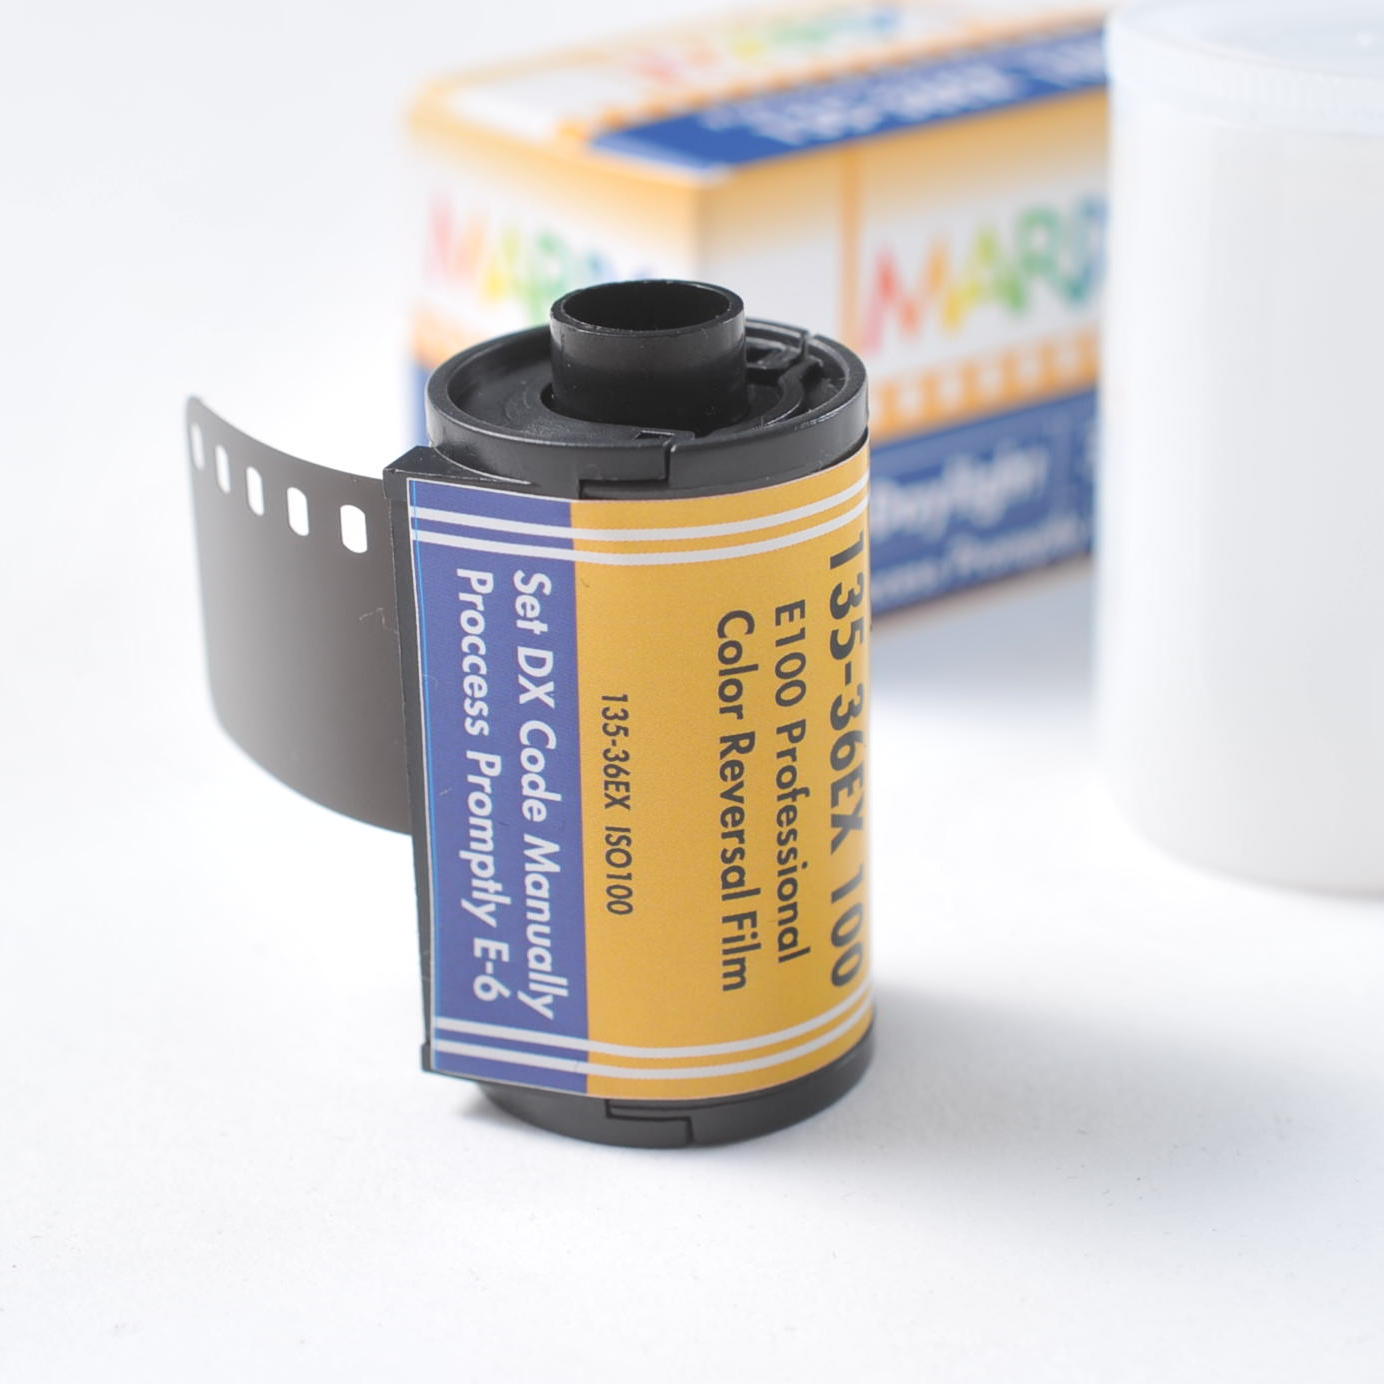 [Free shipping, set of 3] MARIX Color reversal film 100D 36 sheets MARIX Color reversal NegaFilm